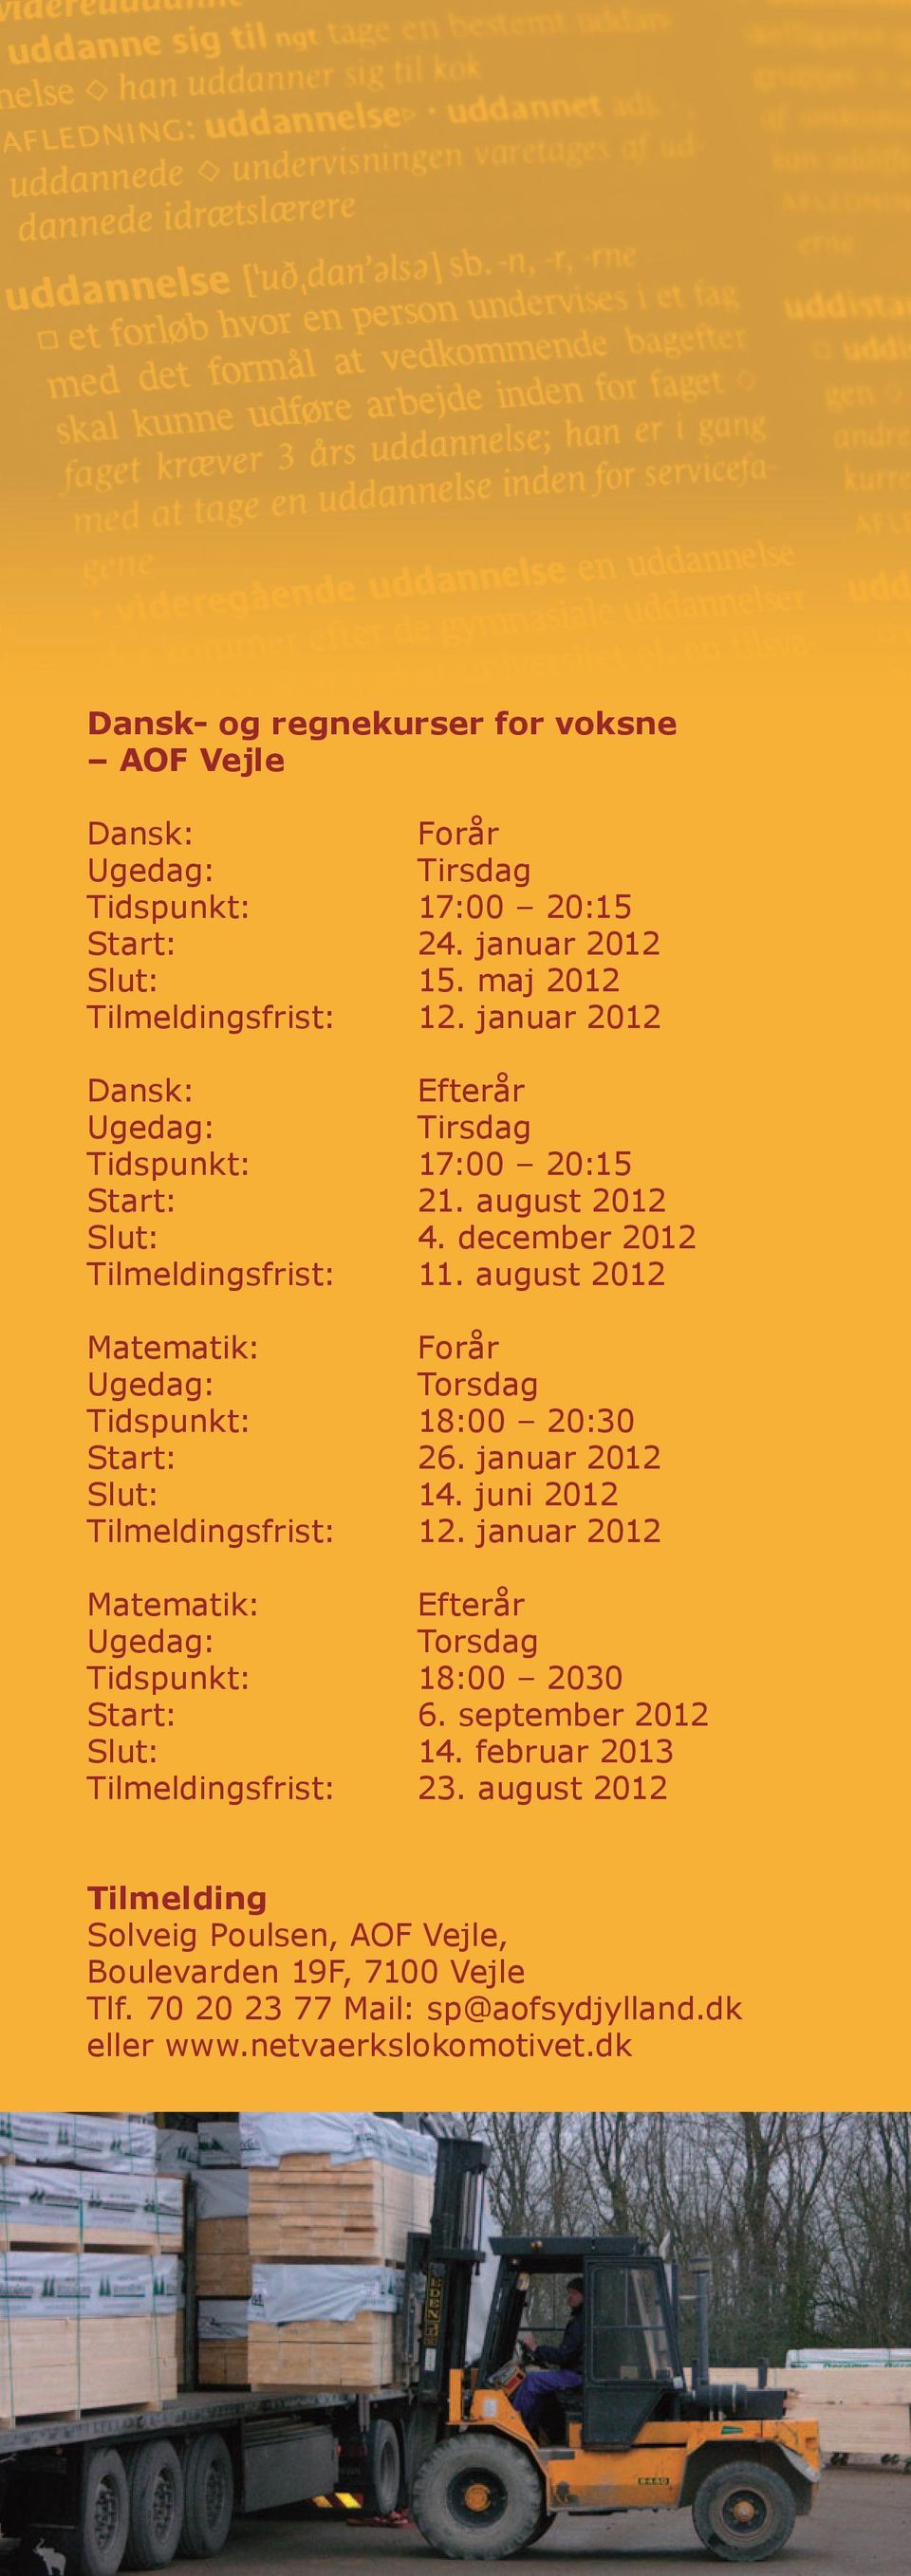 august 2012 Matematik: Forår Tidspunkt: 18:00 20:30 Start: 26. januar 2012 Slut: 14. juni 2012 Tilmeldingsfrist: 12.